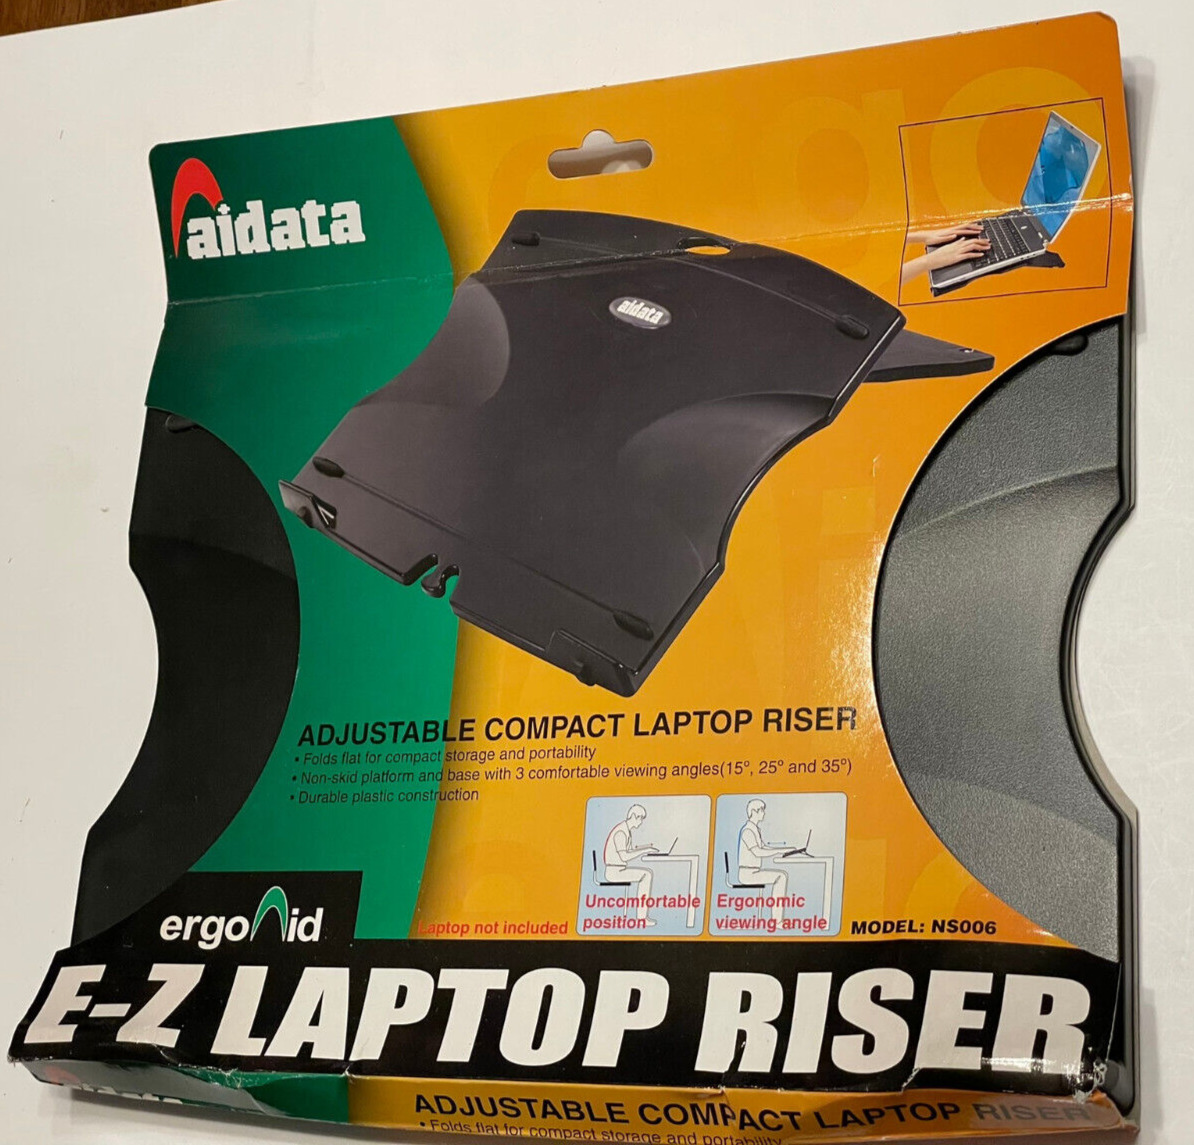 Aidata E-Z Laptop Riser, Adjustable Compact Design - Model NS006 - New